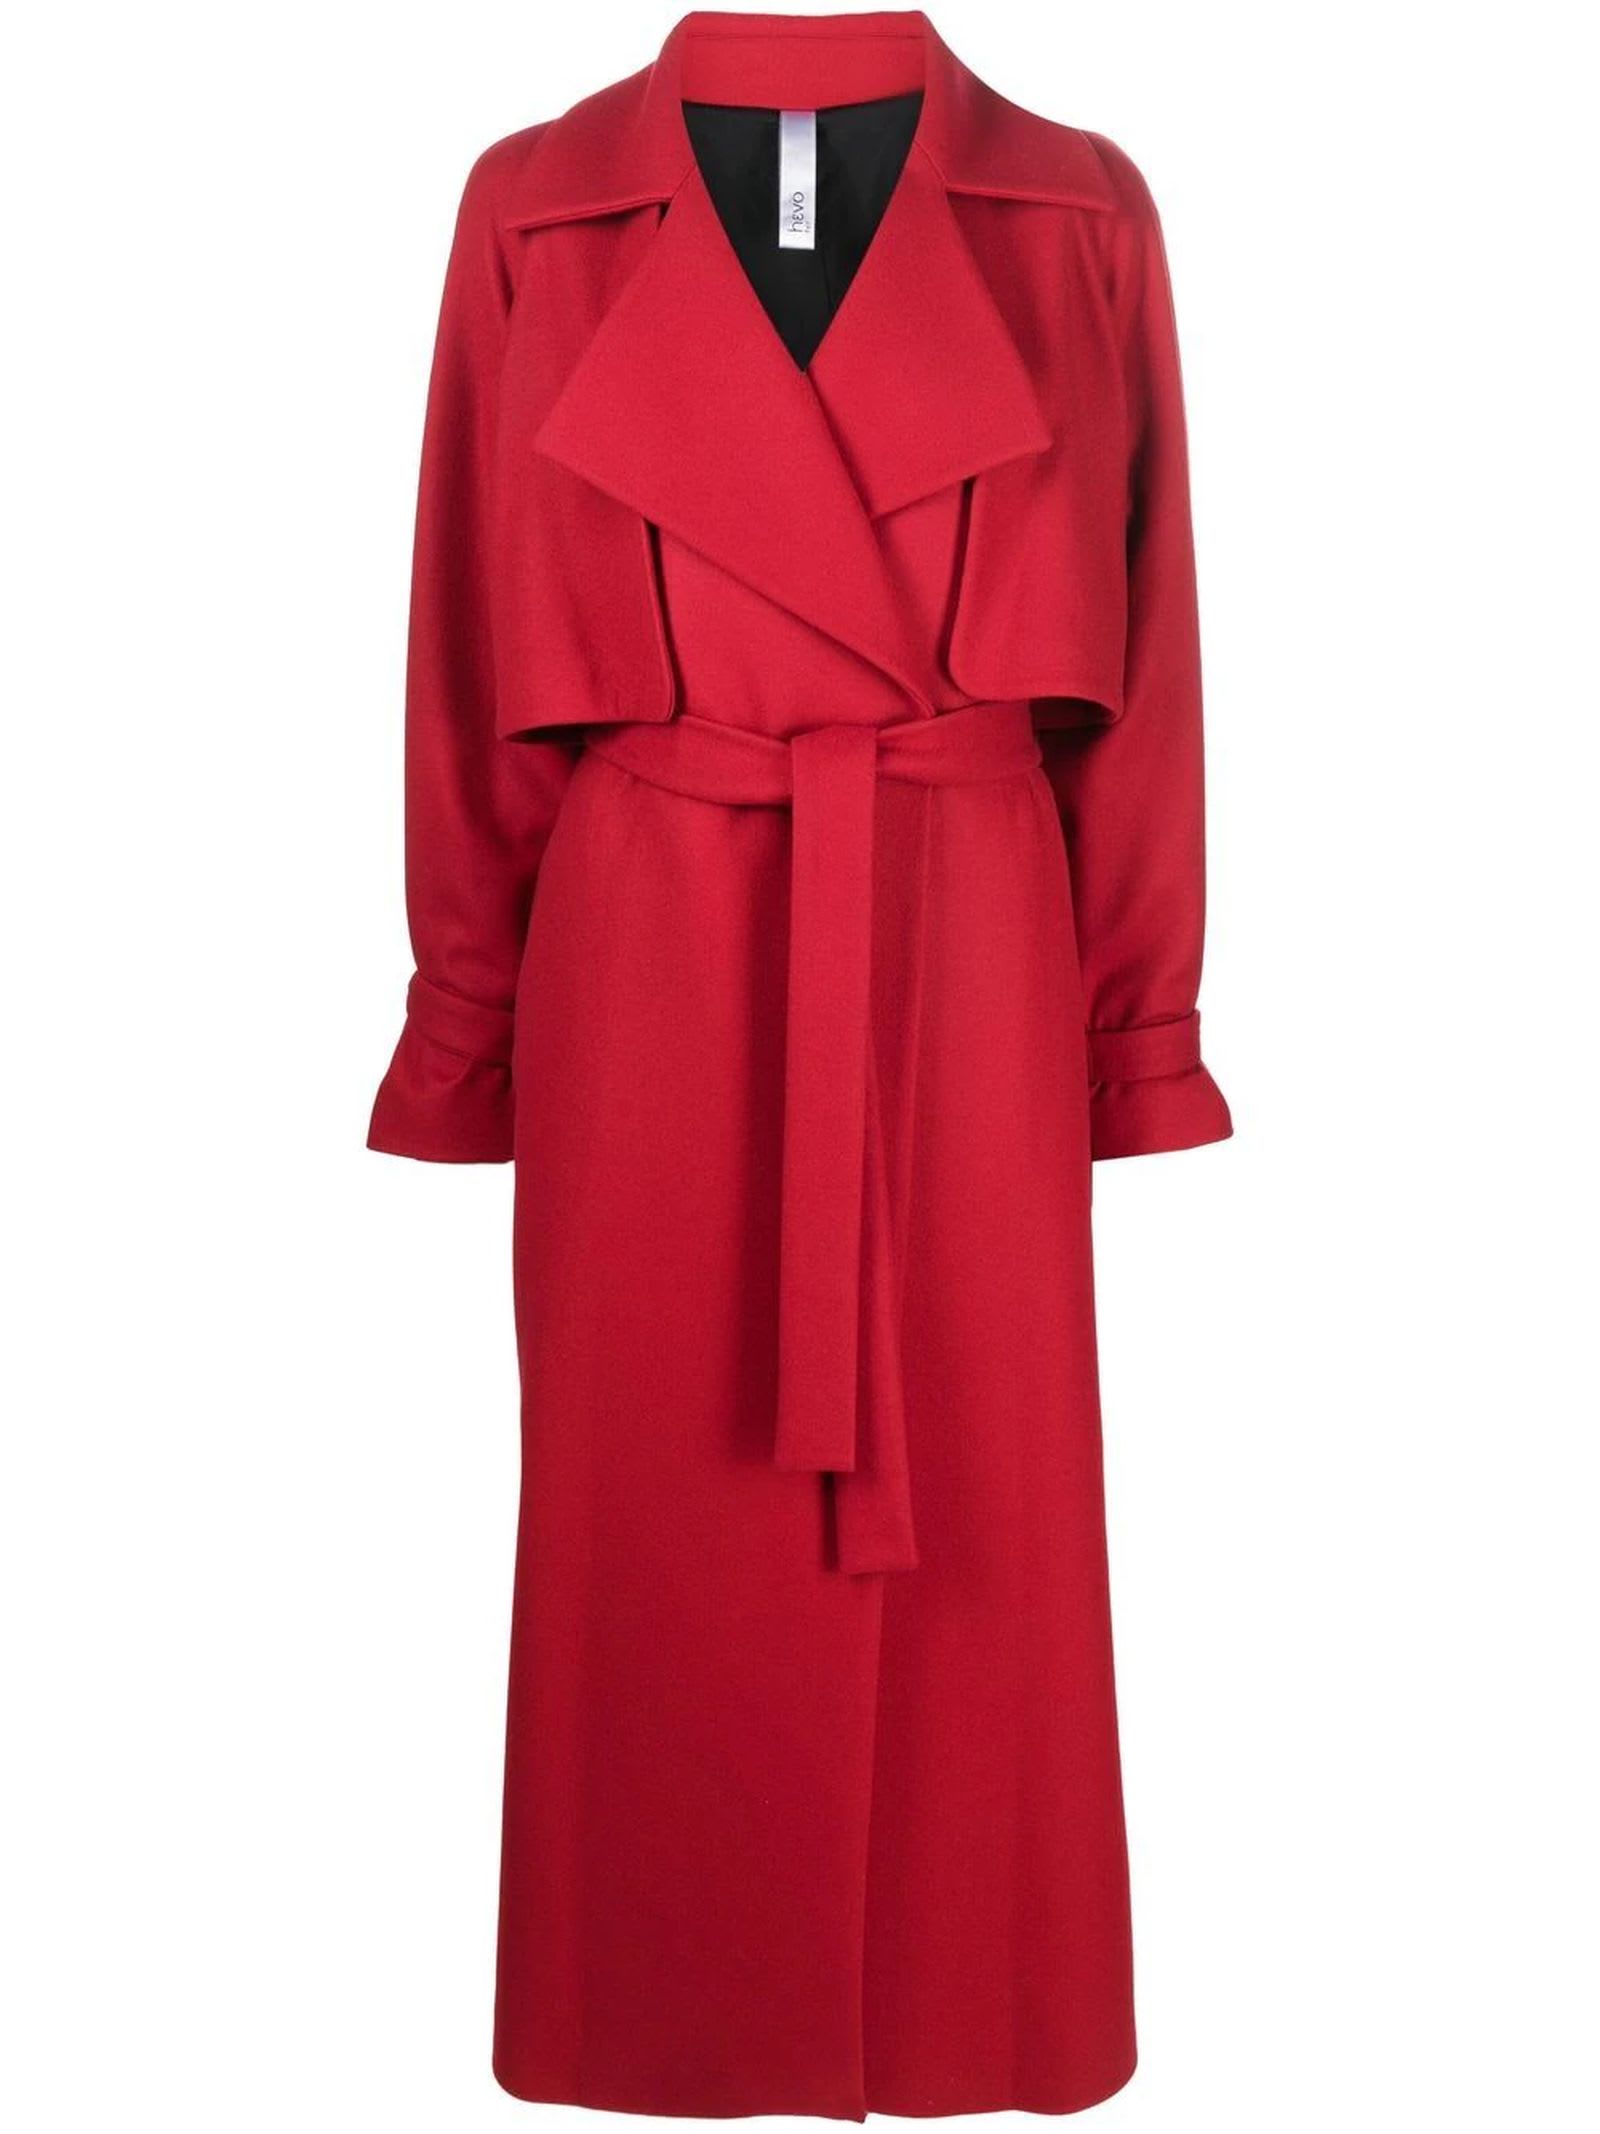 Hevò Bright Red Virgin Wool Blend Coat